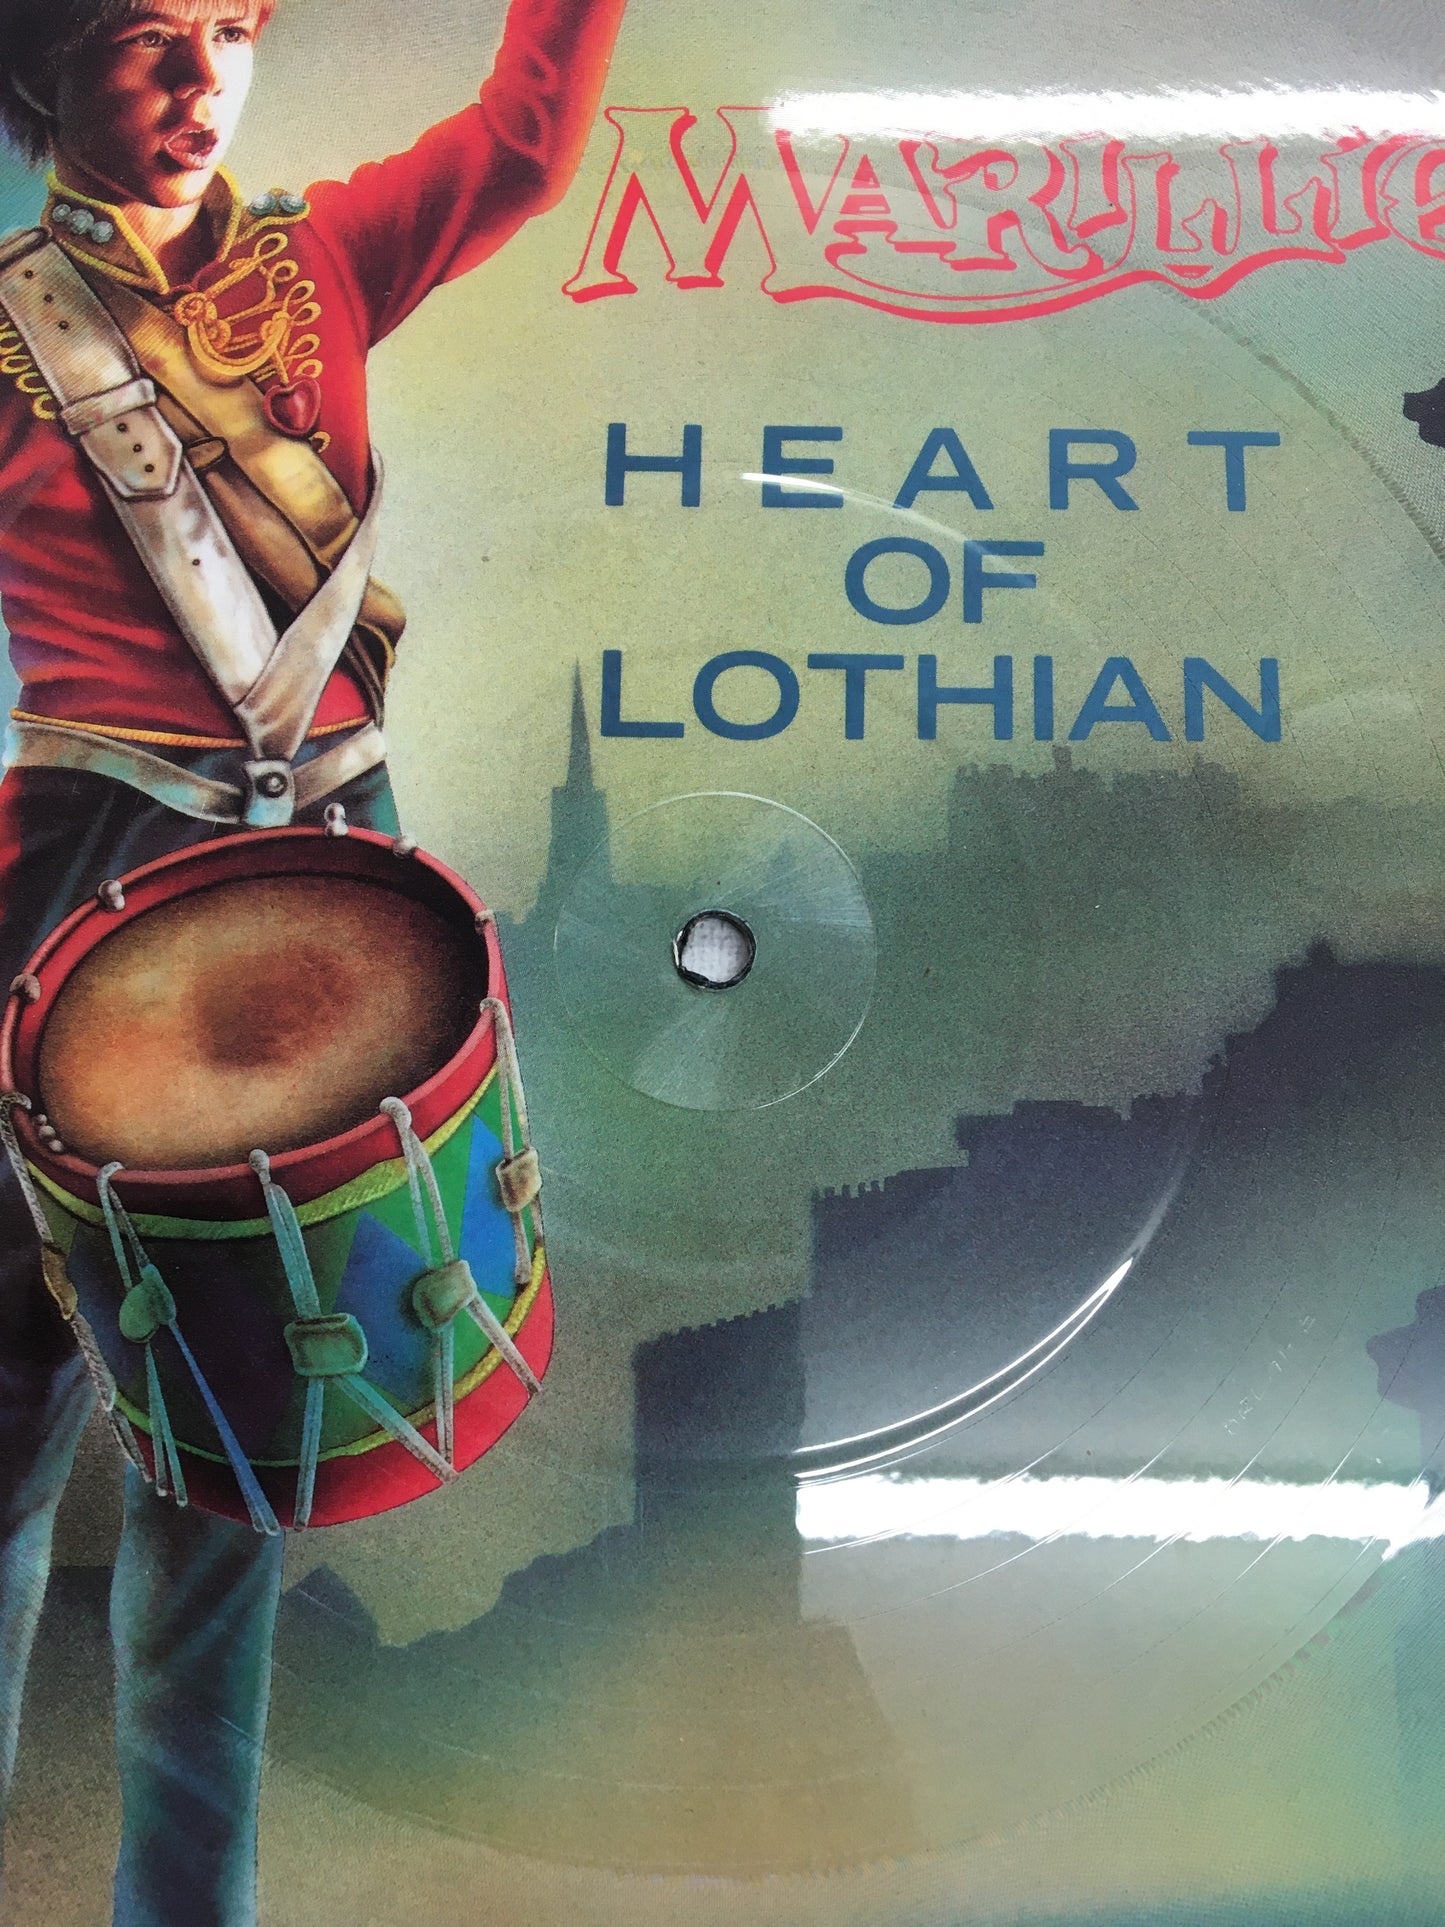 MARILLION 12” PICTURE DISC ; HEART OF LOTHIAN